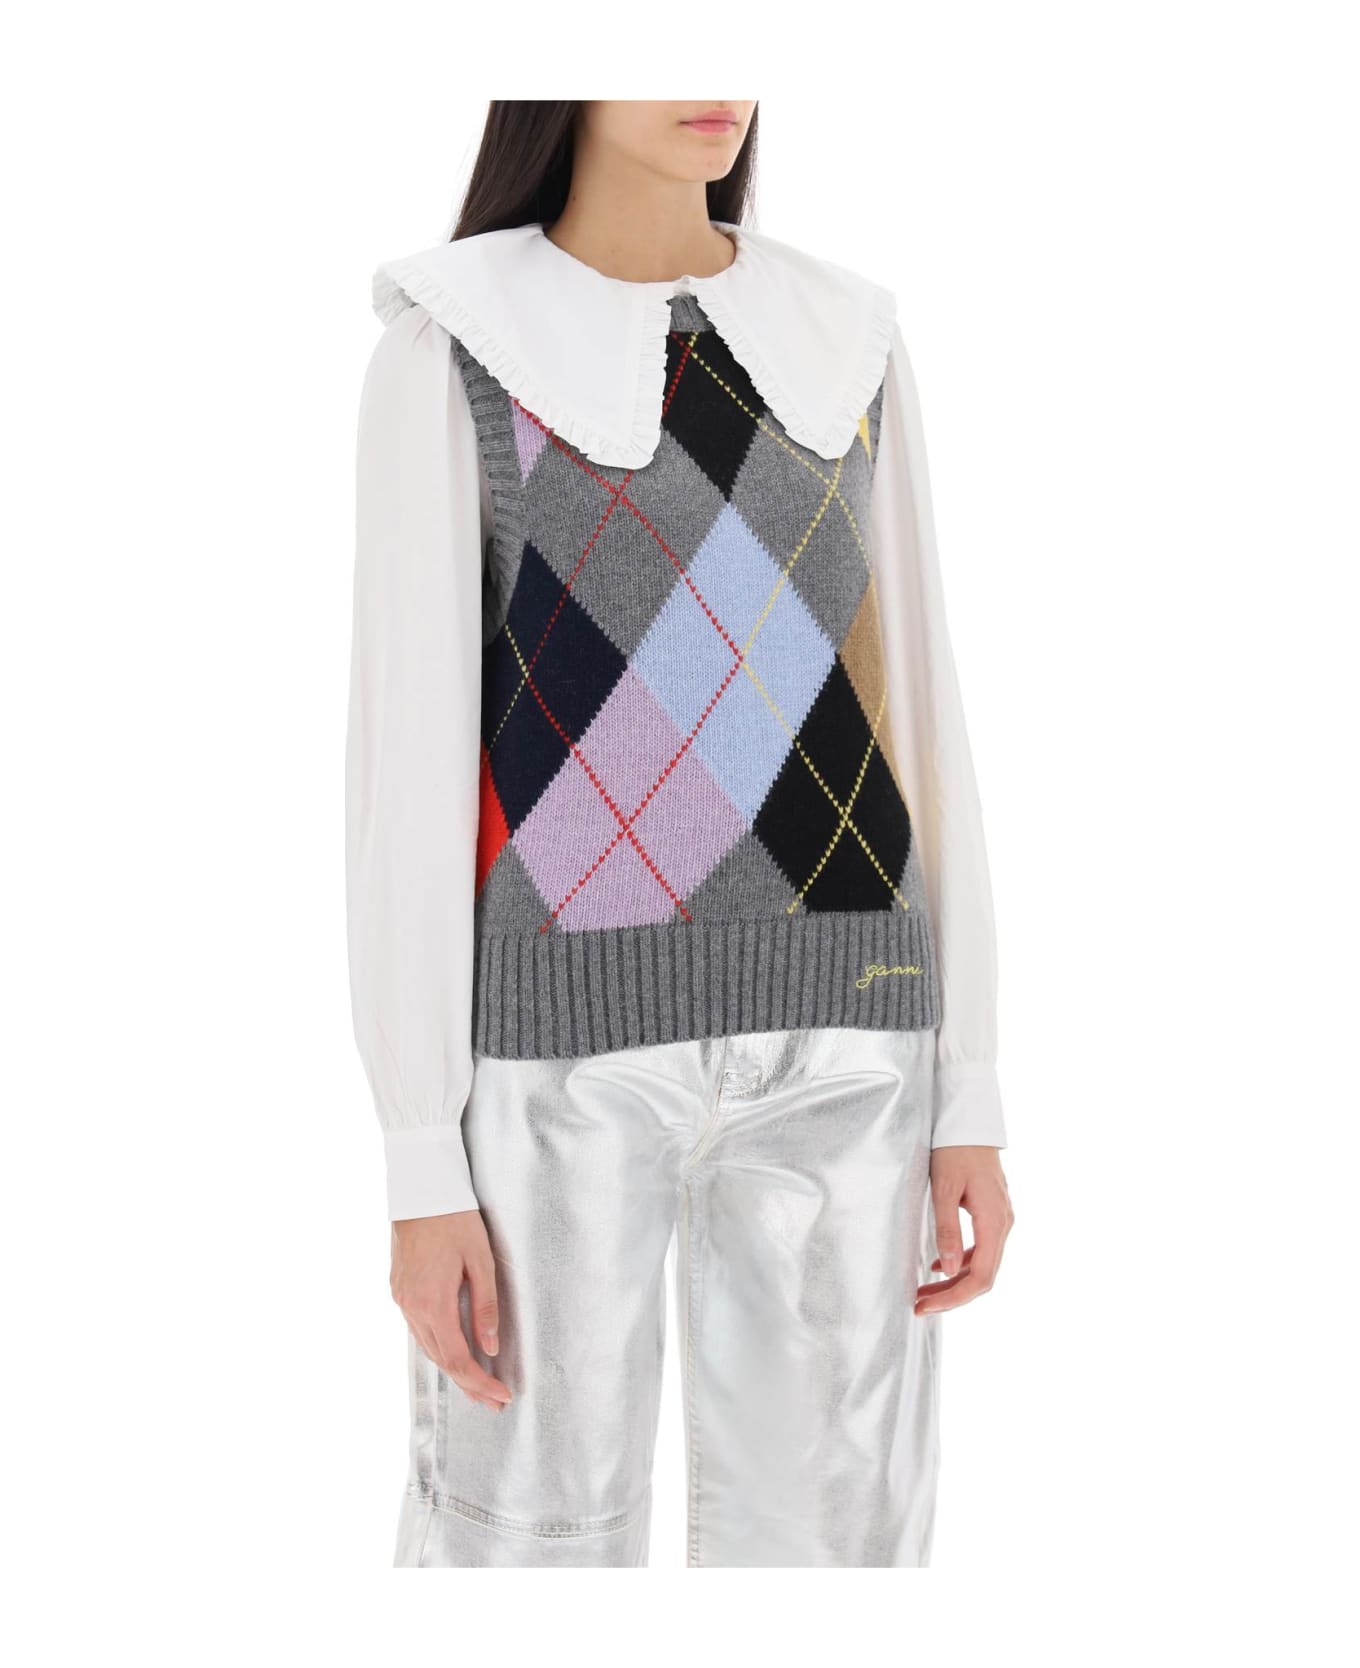 Ganni Harlequin Wool Mix Knit Vest - Frost Gray ニットウェア